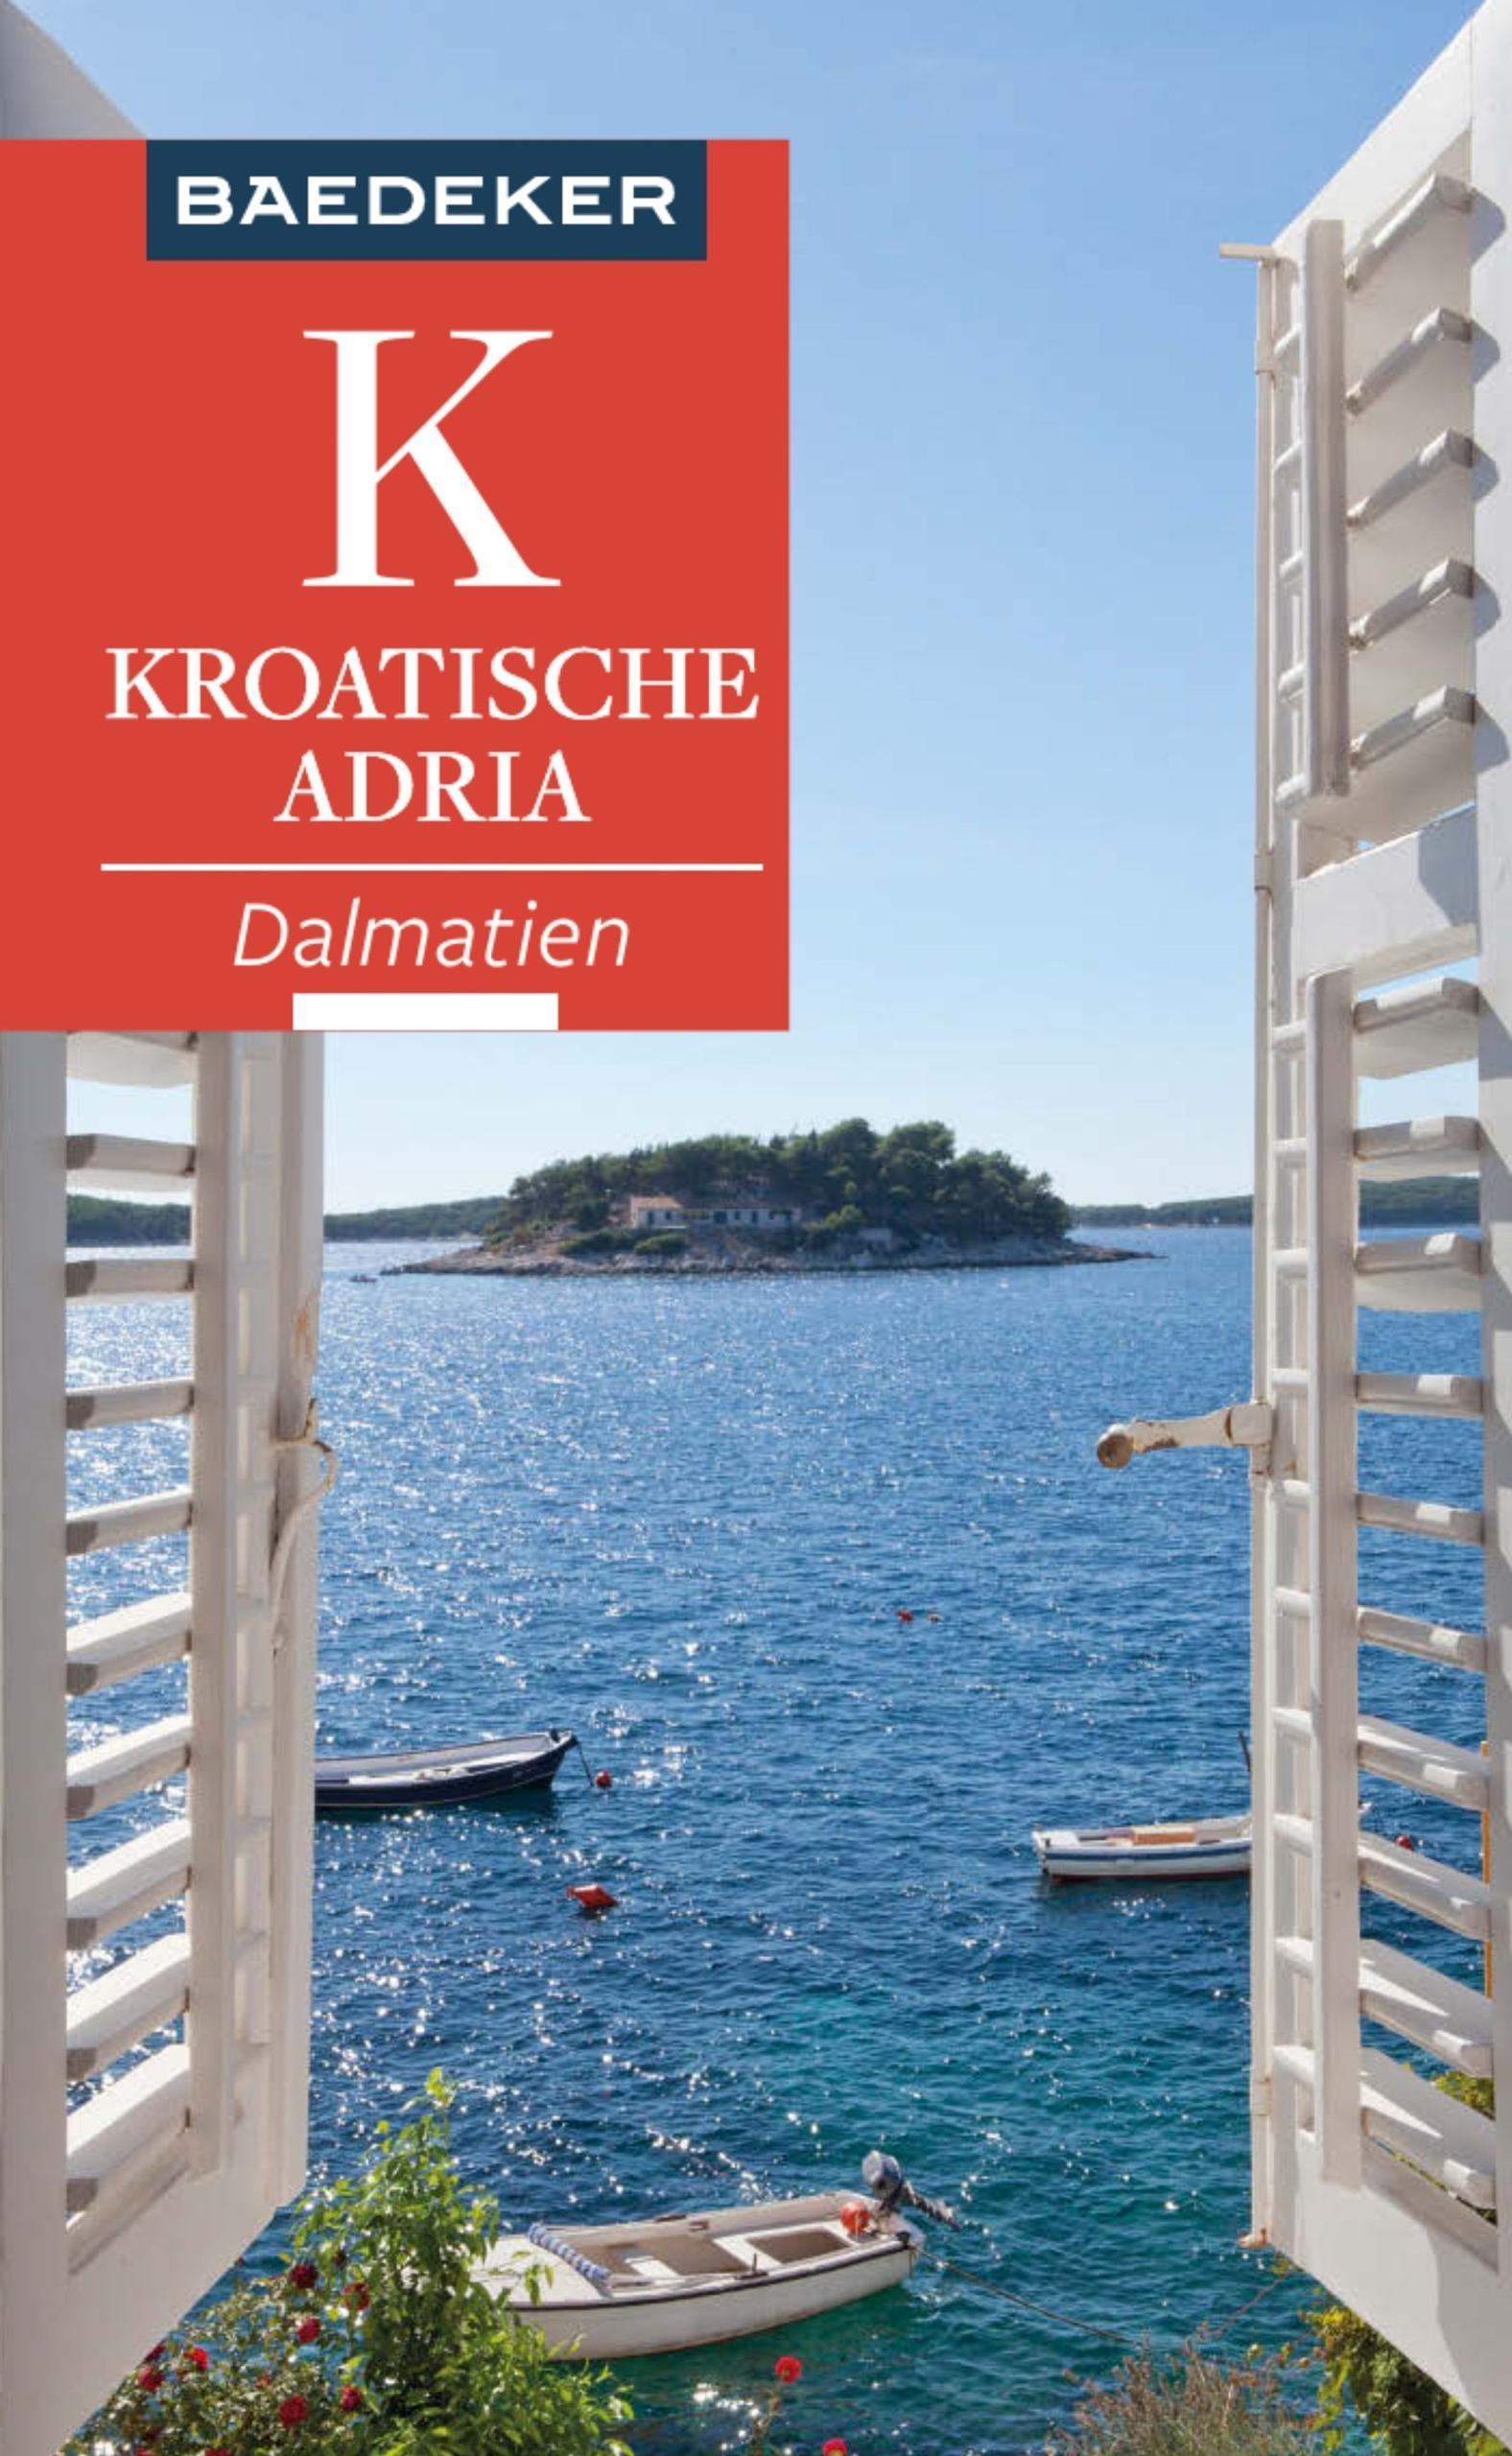 Baedeker Reiseführer E-Book Kroatische Adria / Baedeker Reiseführer E-Book